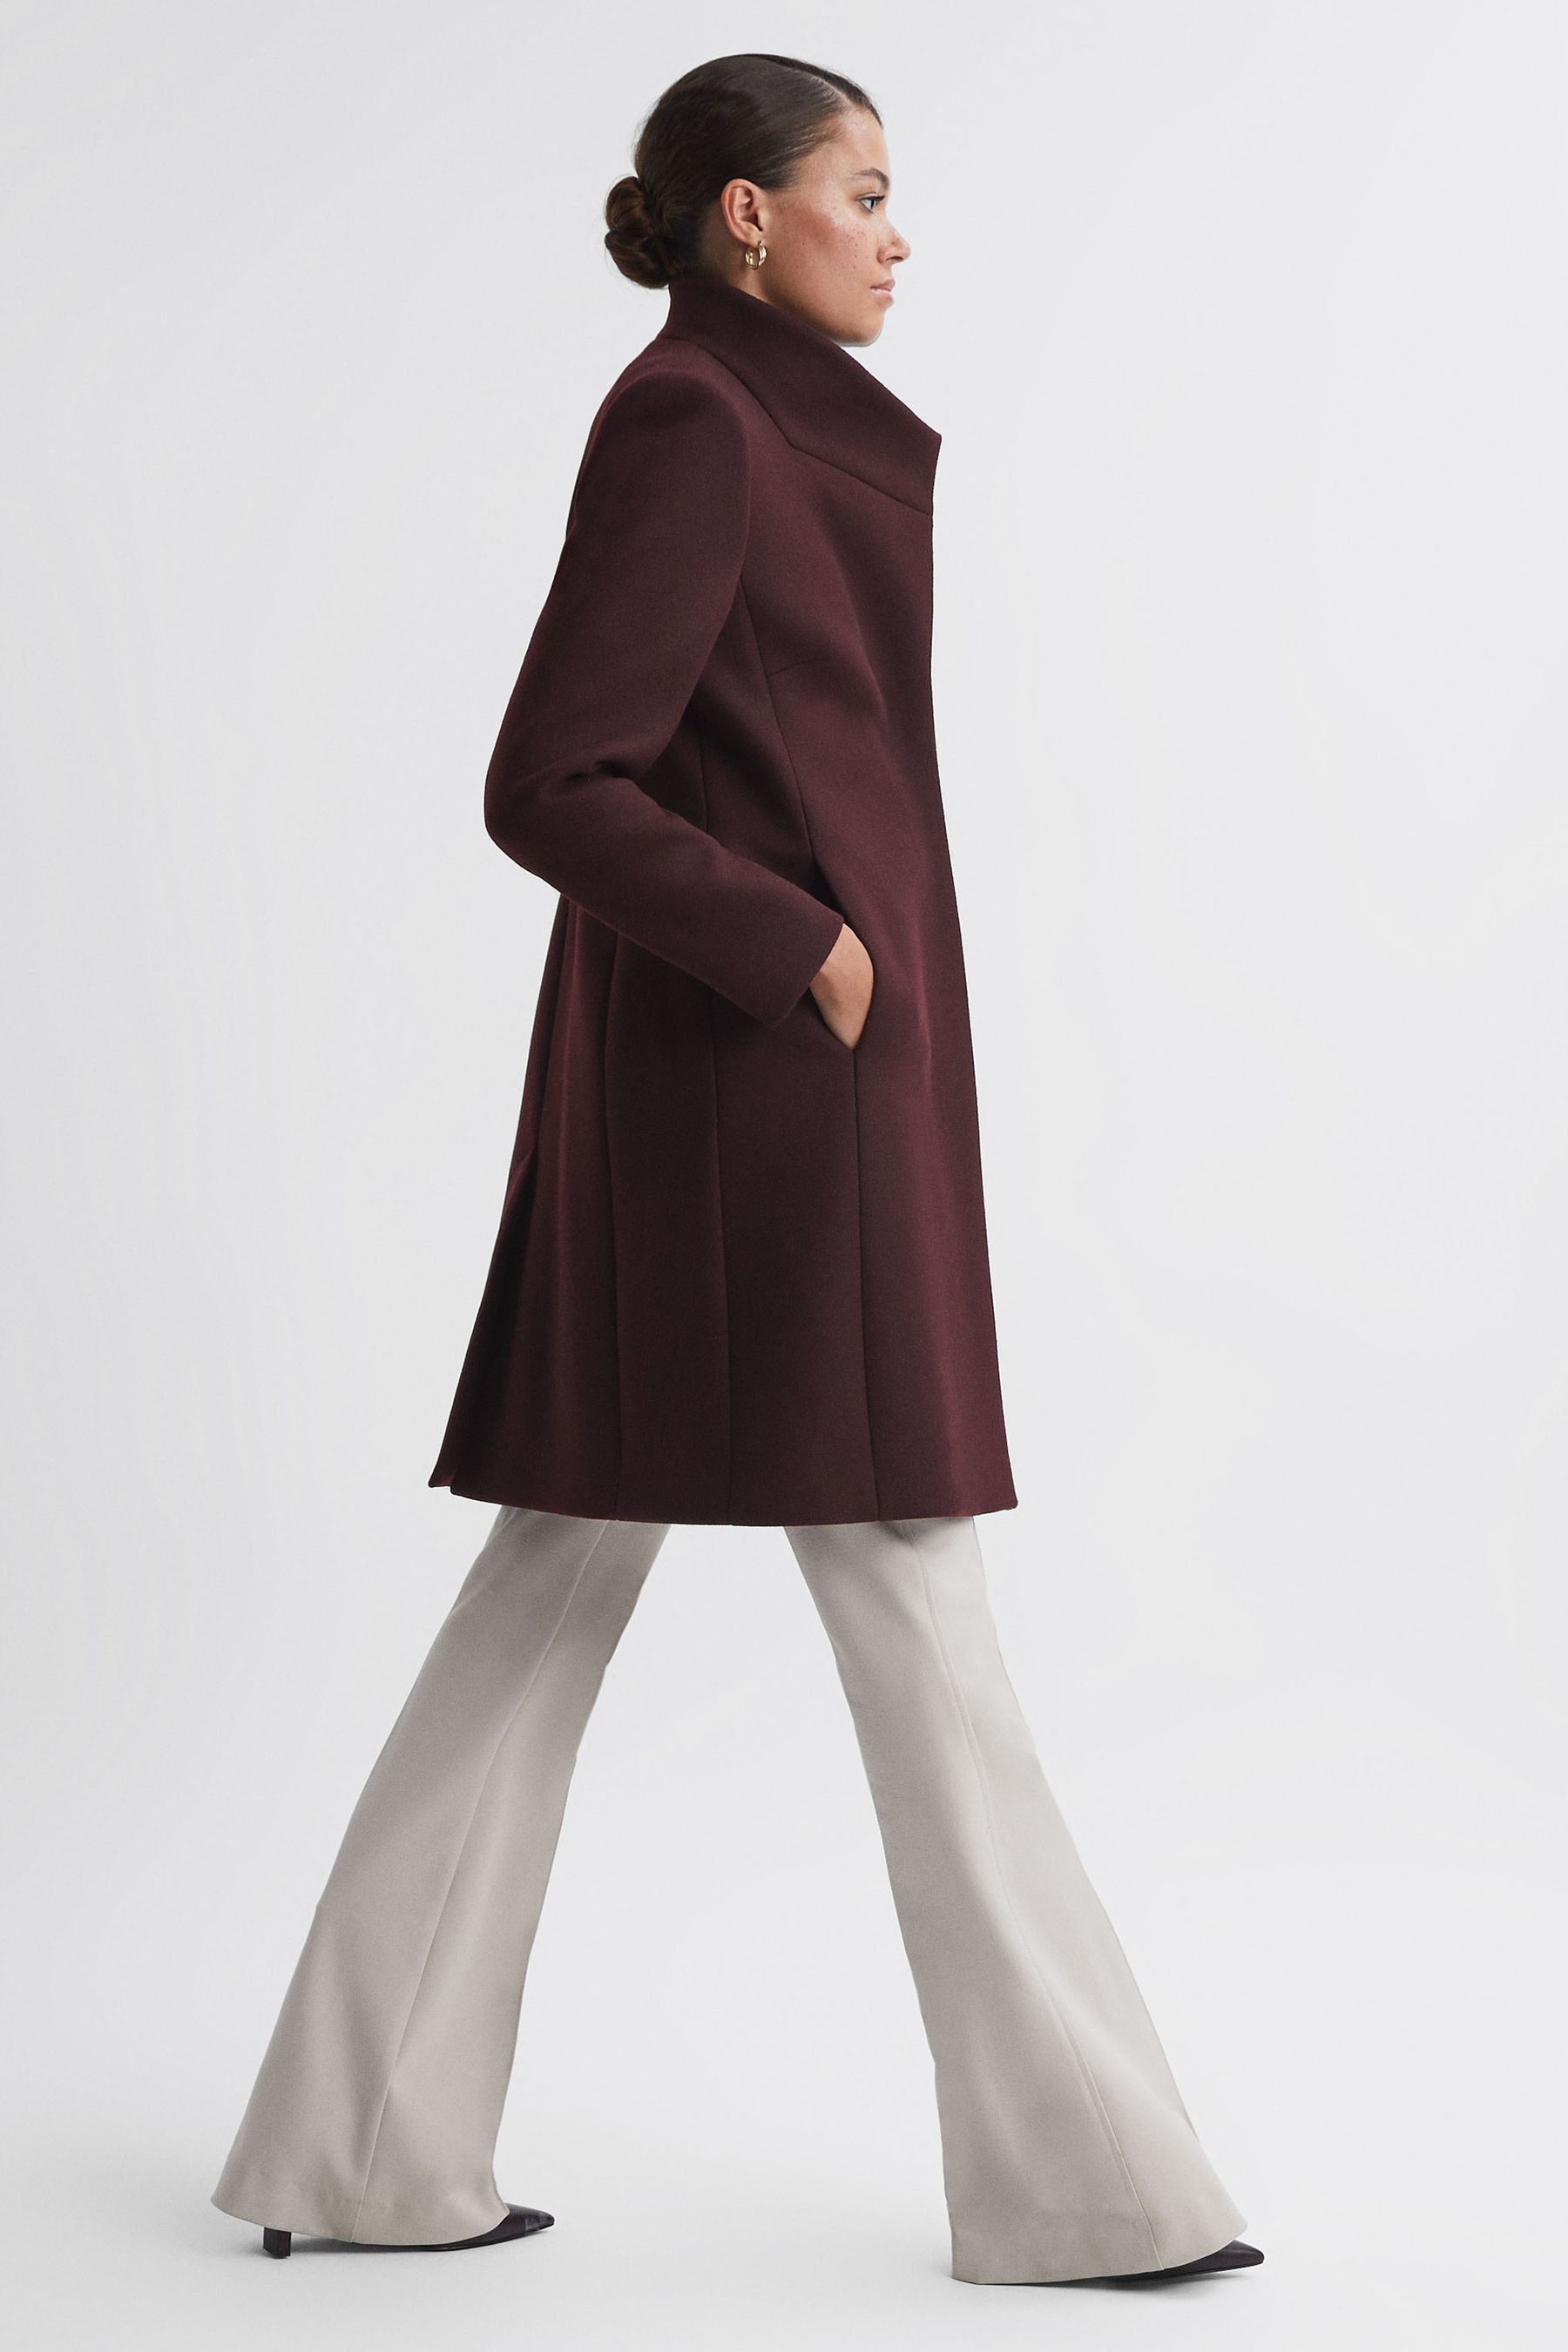 Reiss Mia - Berry Mia Wool Blend Mid-length Coat, Us 4